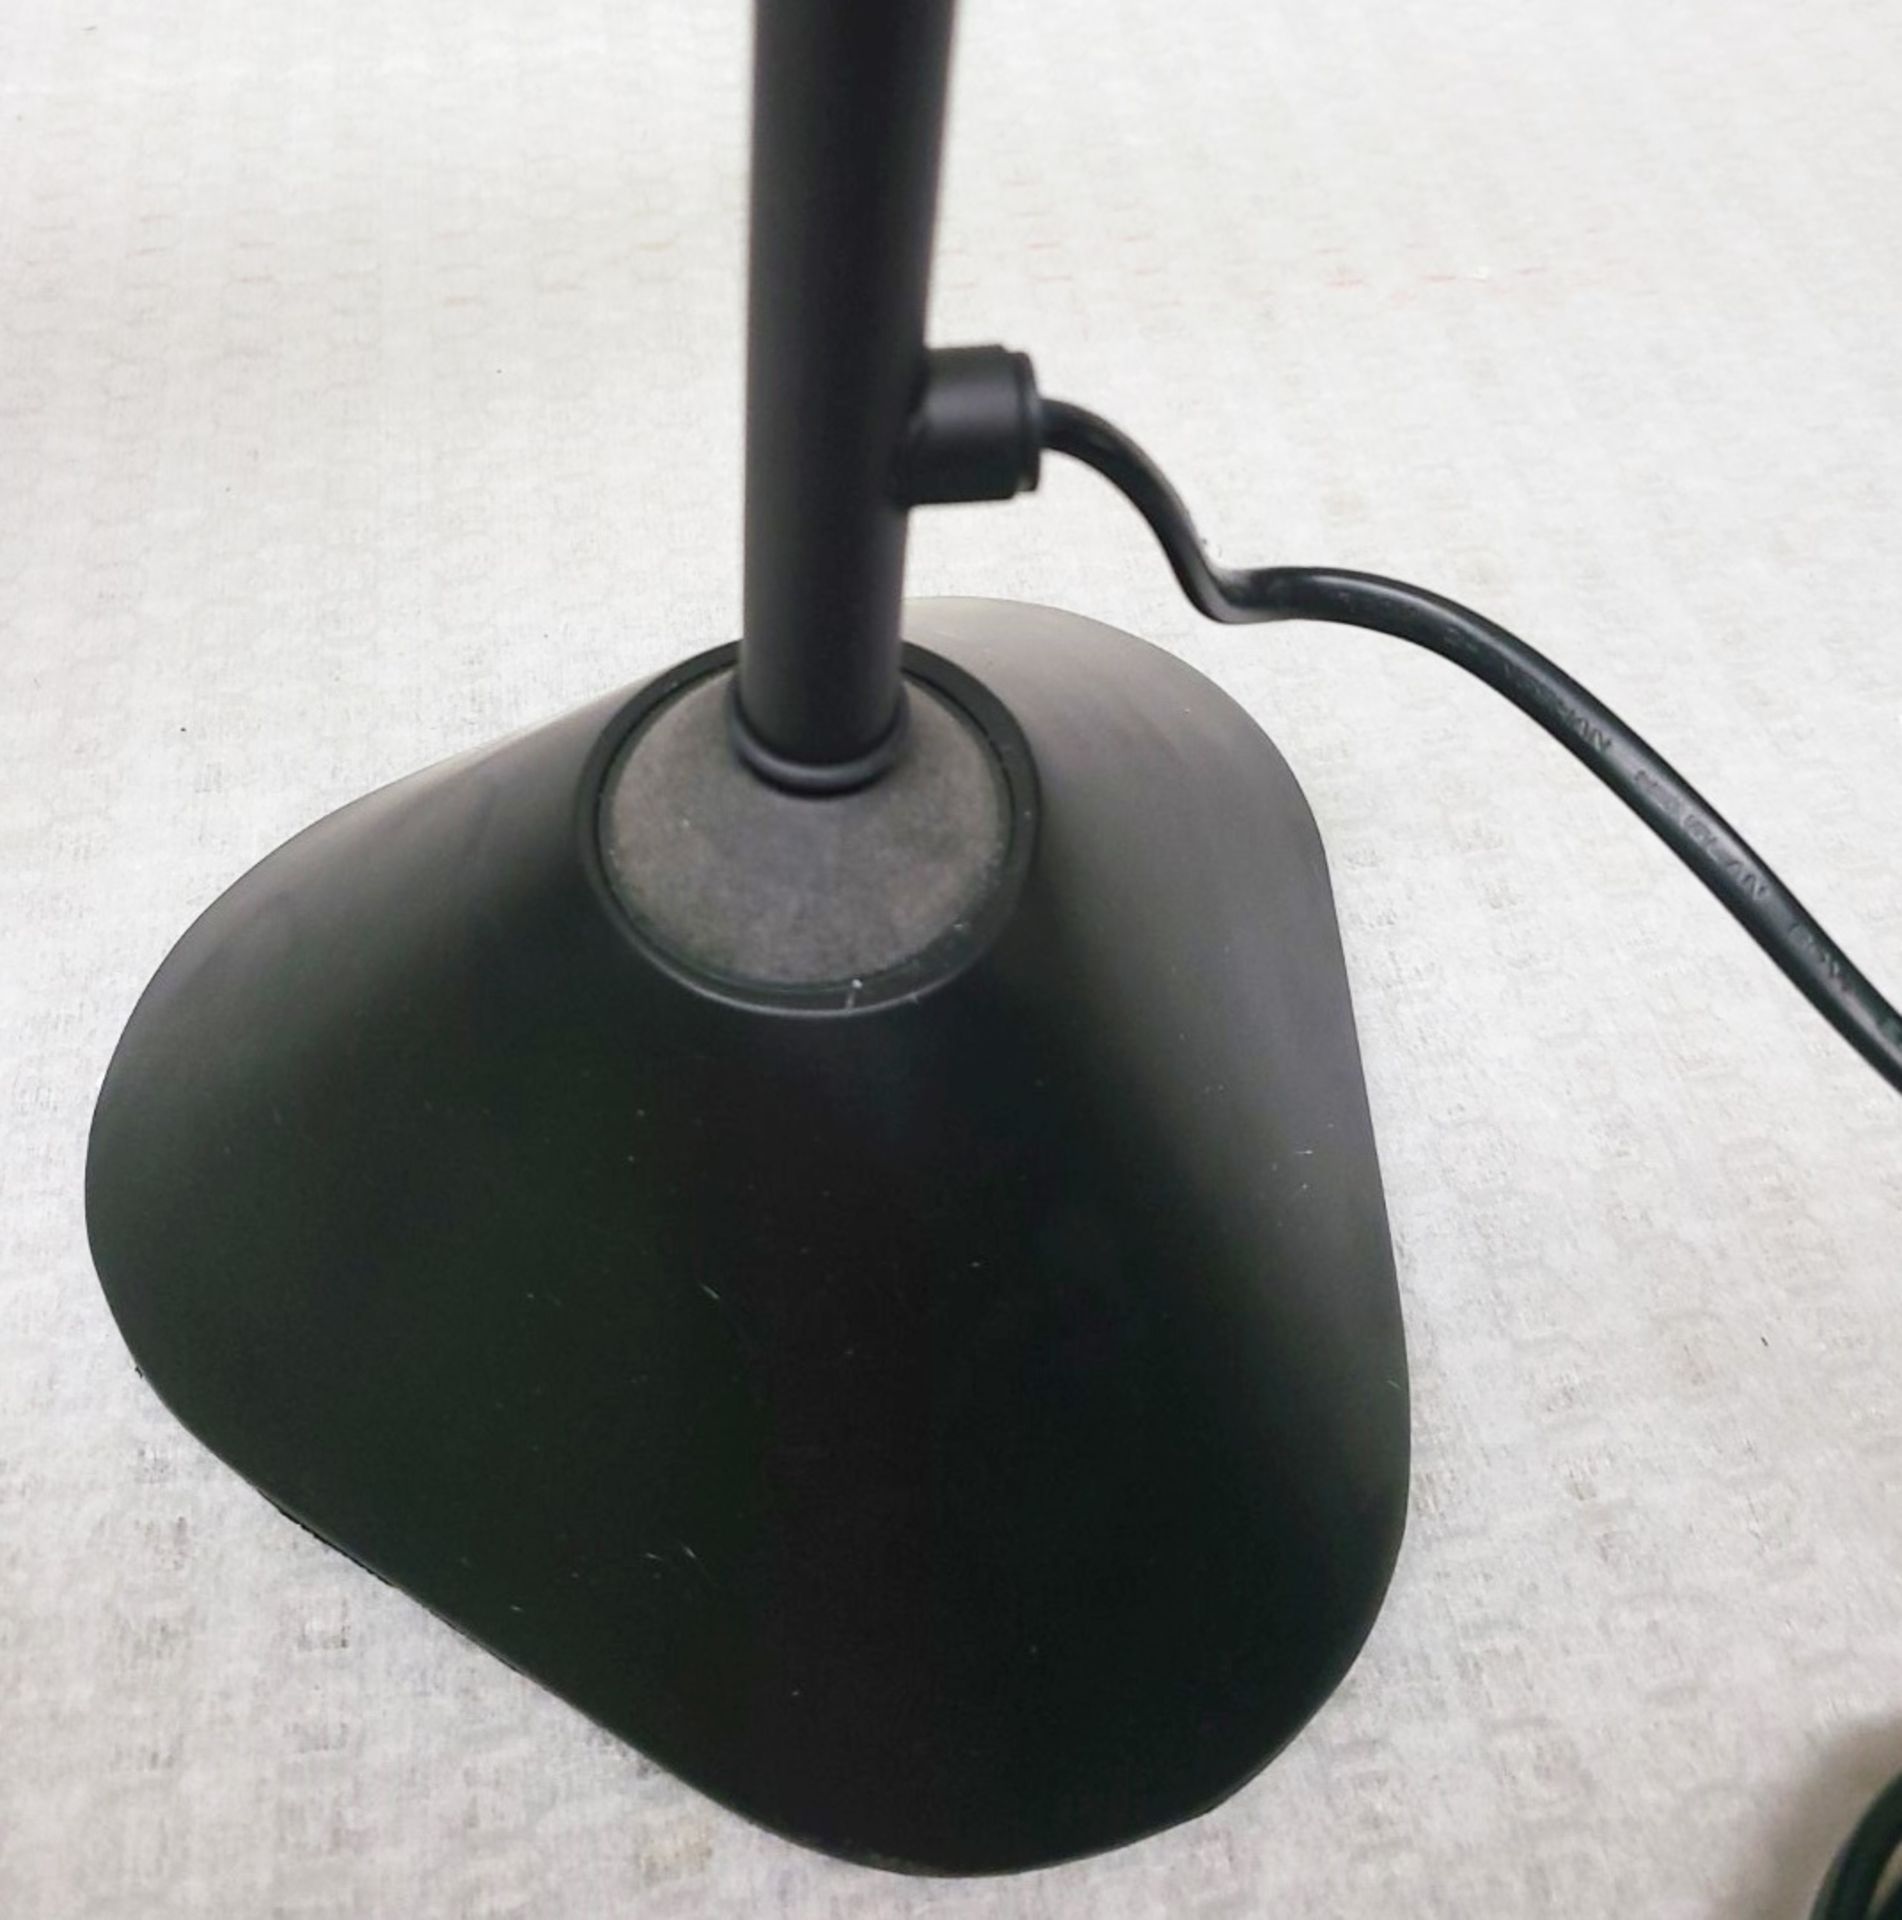 1 x BLUESUNTREE Retro Task Lamp W/ Adjustable Head & Neck With Ball & Socket Base With Ochre Shade - Image 6 of 7